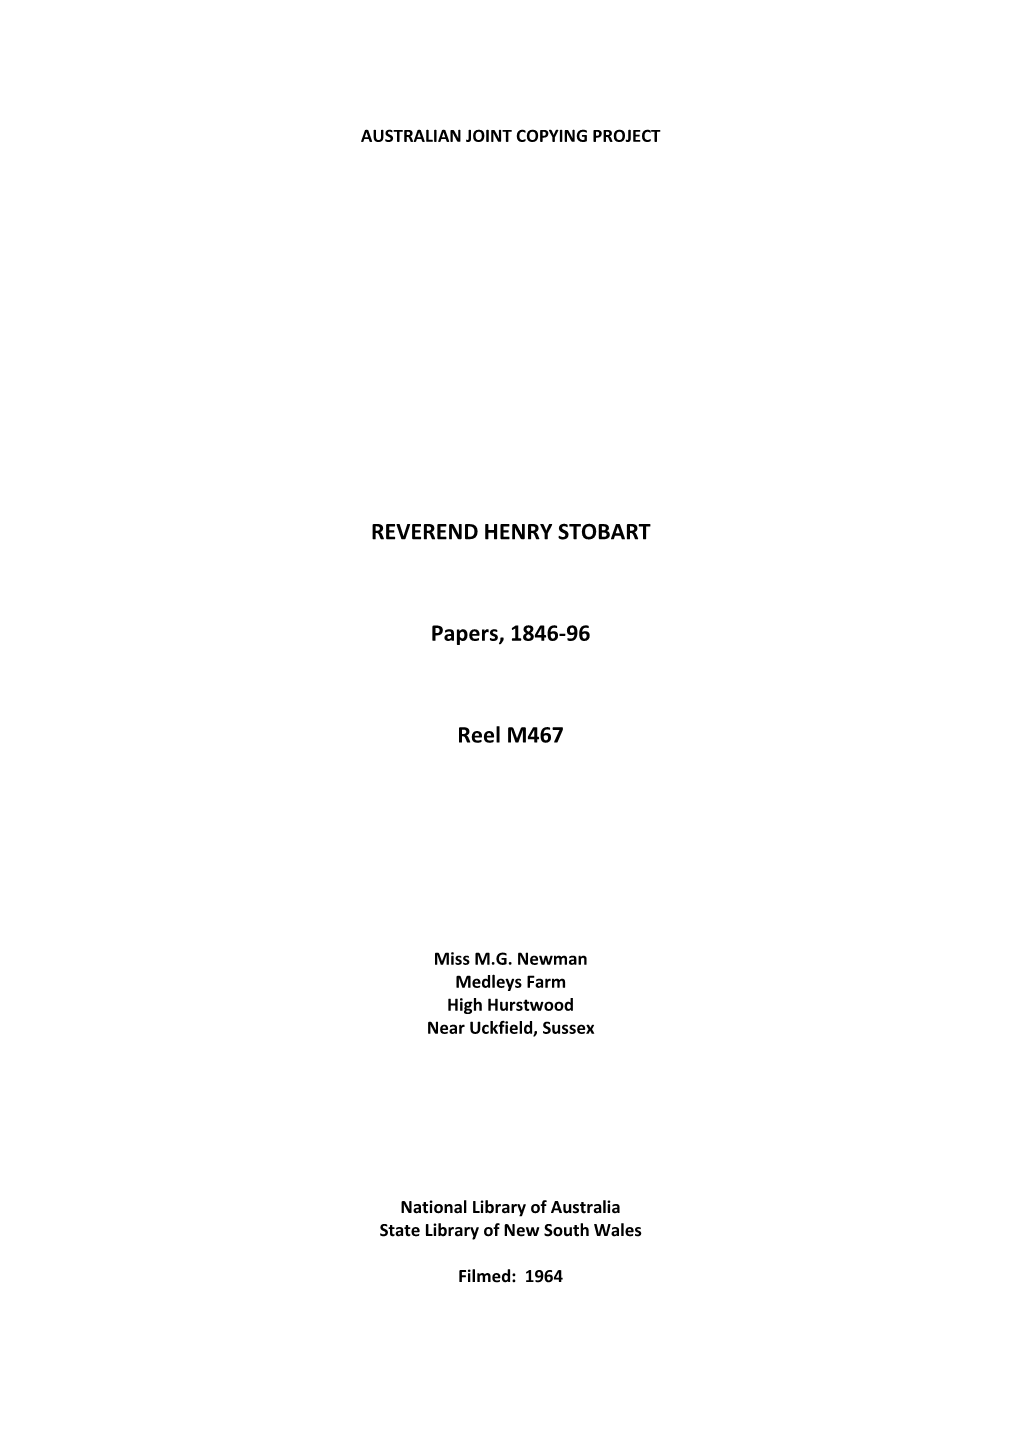 REVEREND HENRY STOBART Papers, 1846-96 Reel M467